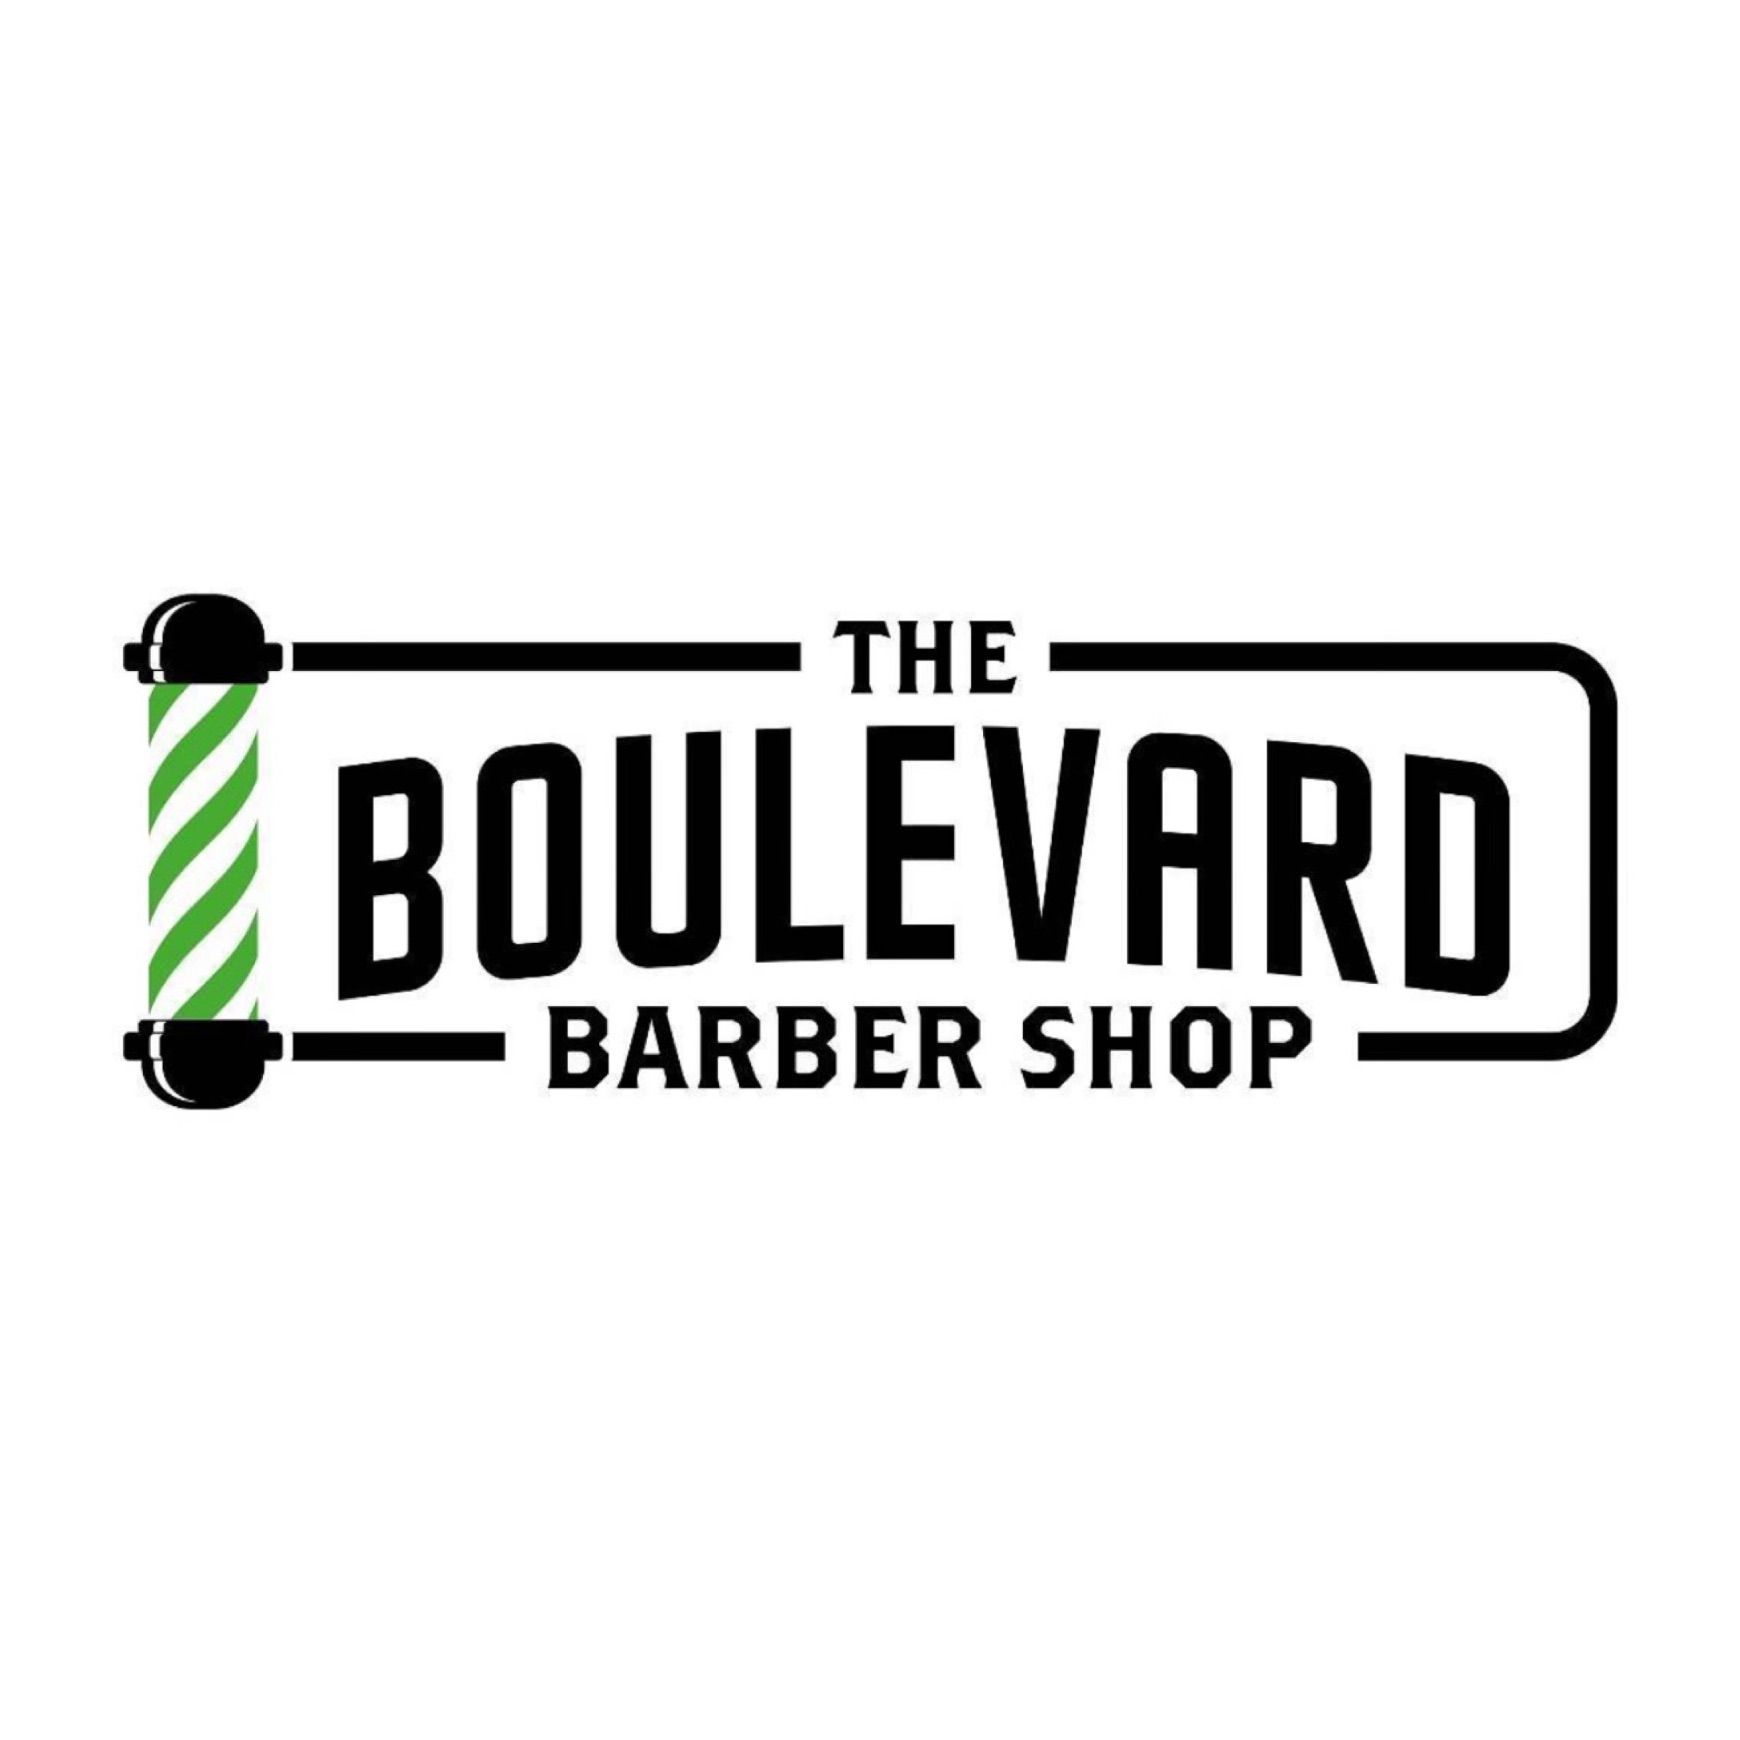 The Boulevard Barber Shop, 4748 Rainbow Blvd, Westwood, 66205